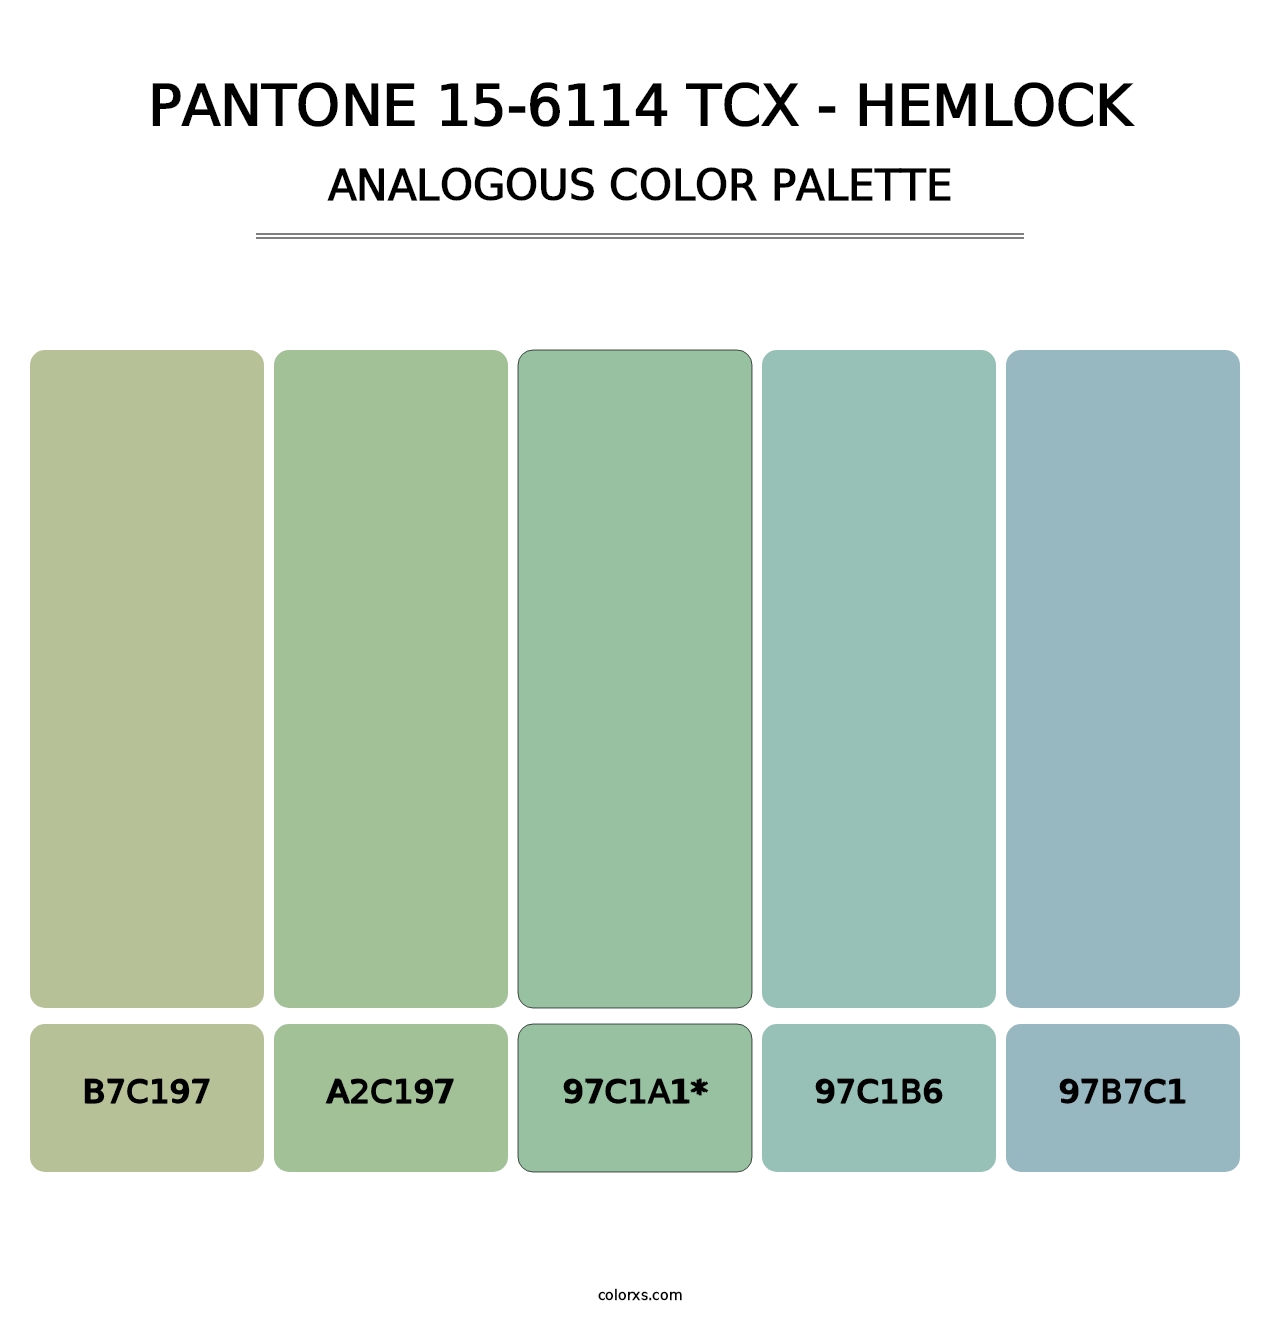 PANTONE 15-6114 TCX - Hemlock - Analogous Color Palette